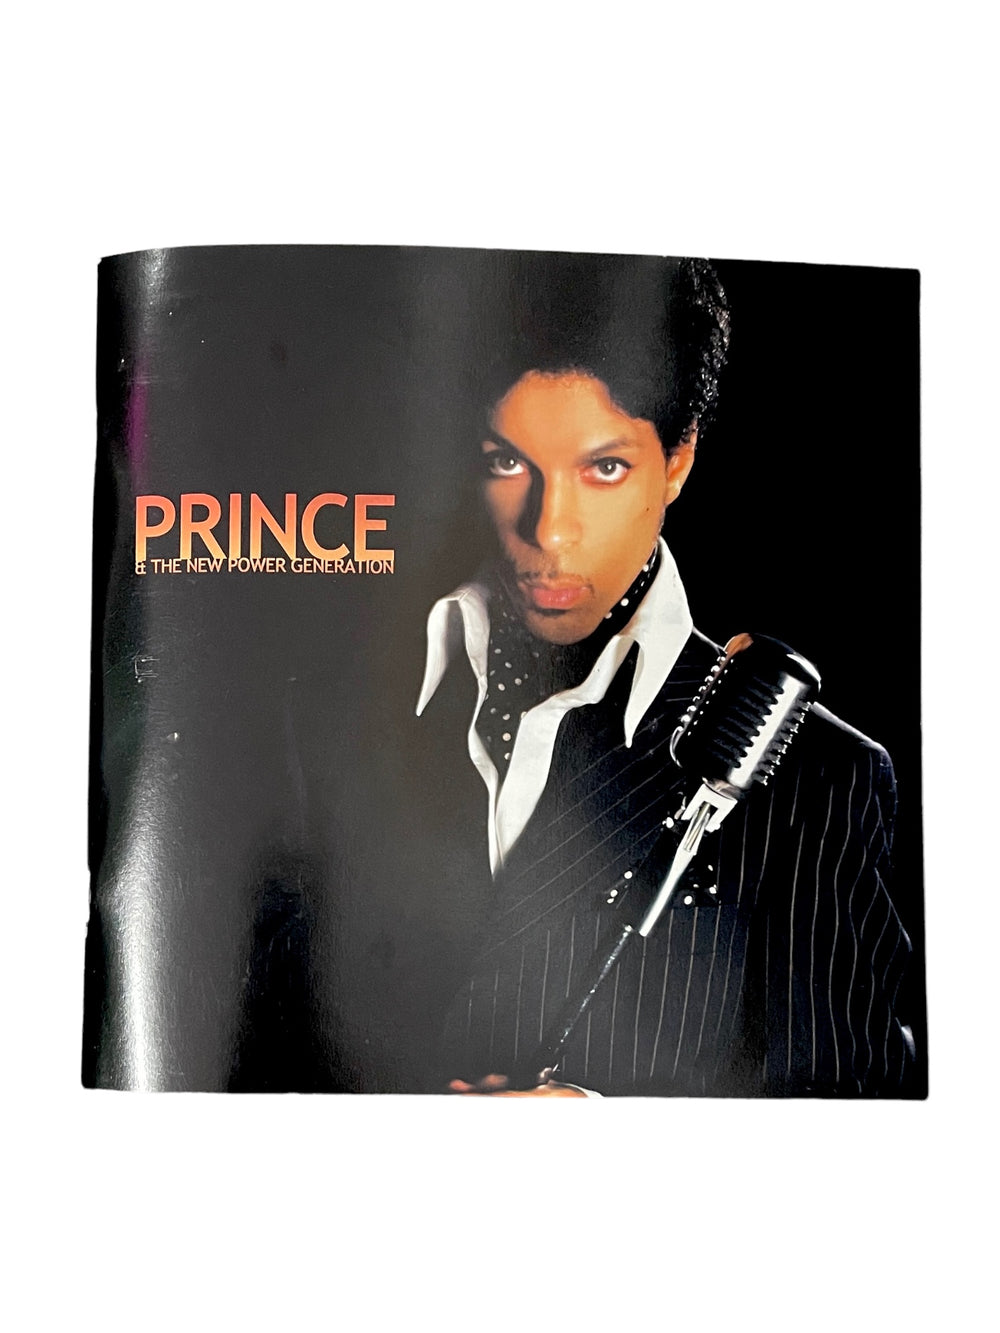 Prince – World Tour (Hawaii and Australia) 2003 Tour Book Beautiful Very Rare